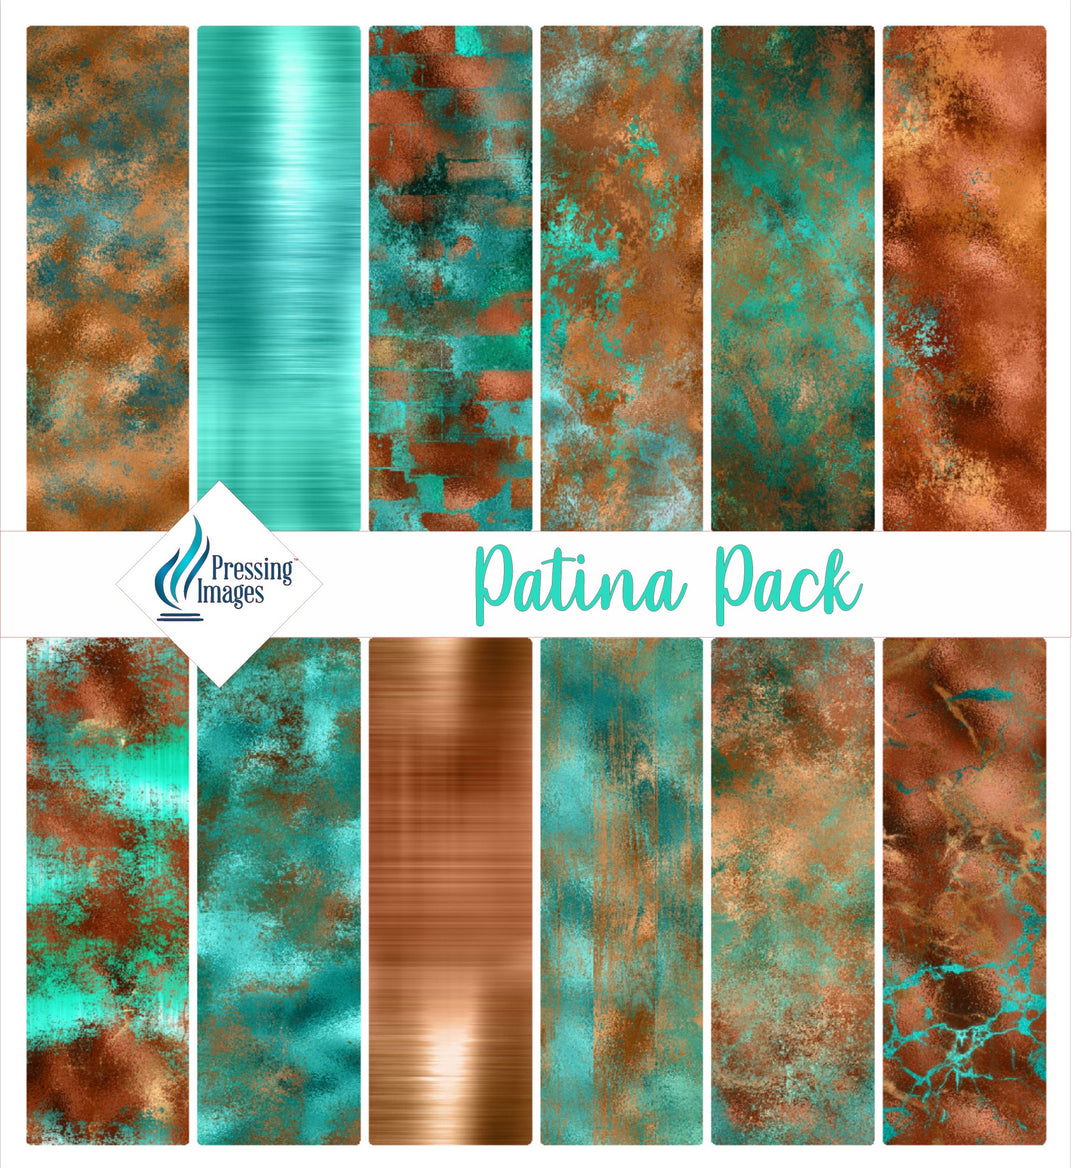 Patina Pack